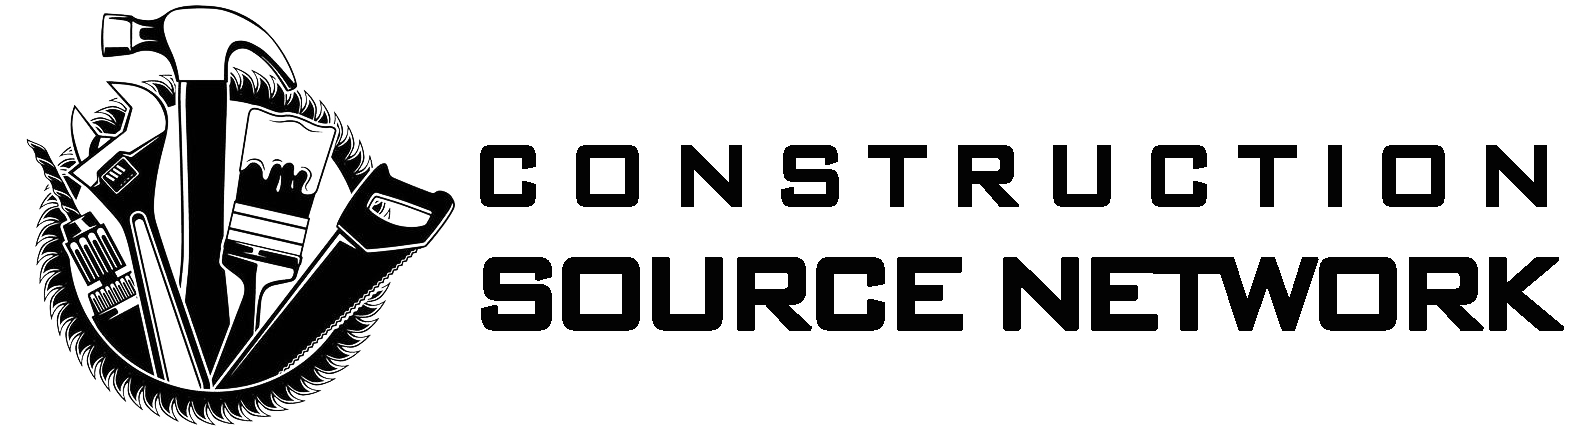 Construction Source Network